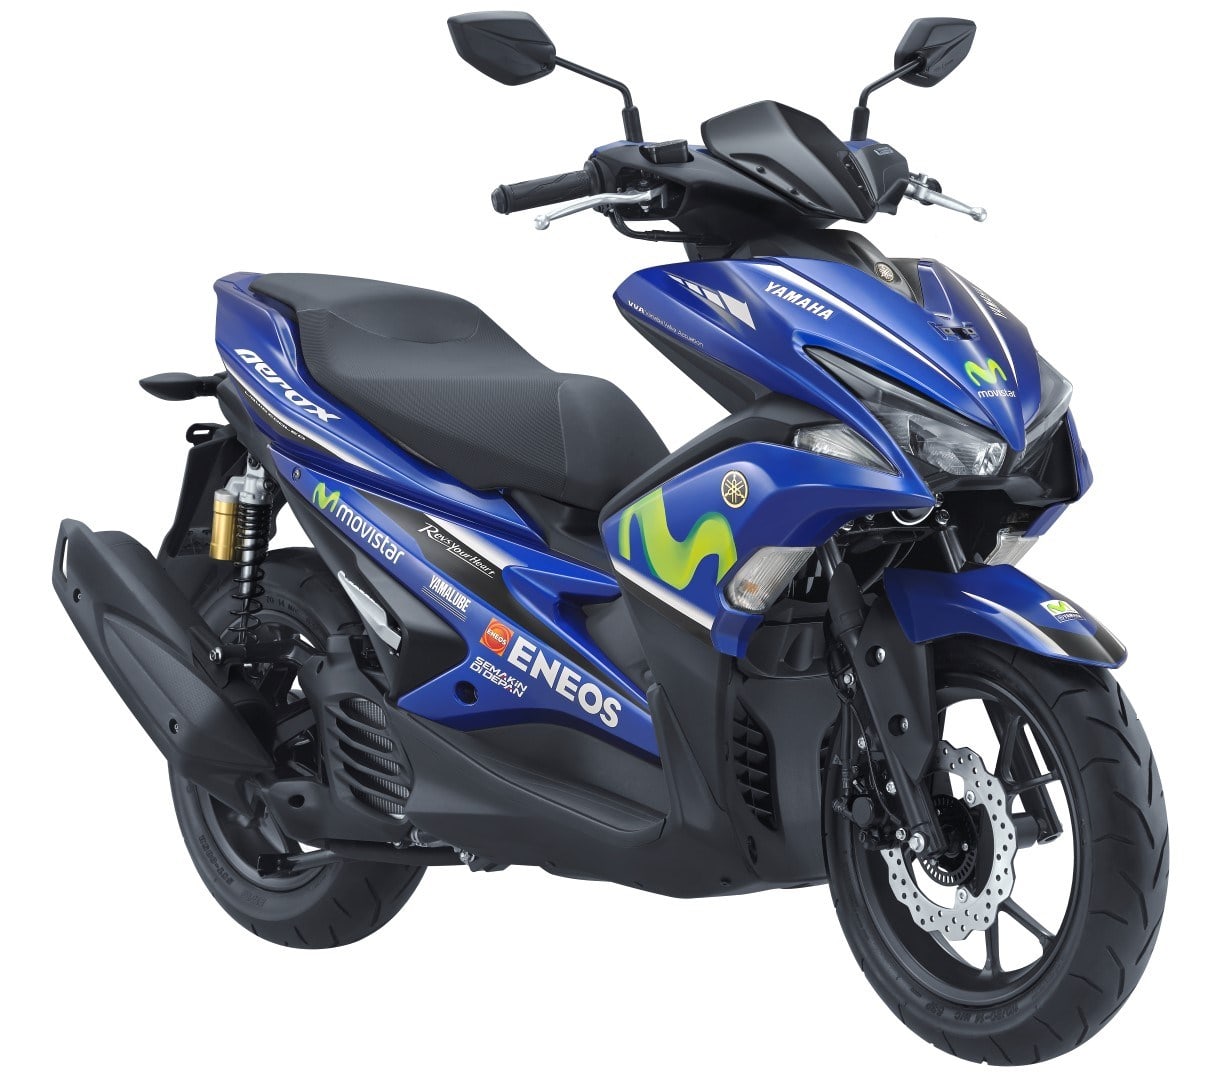 Yamaha Indonesia resmi merilis 5 motor berlivery MotoGP Movistar, harga naik sedikit saja